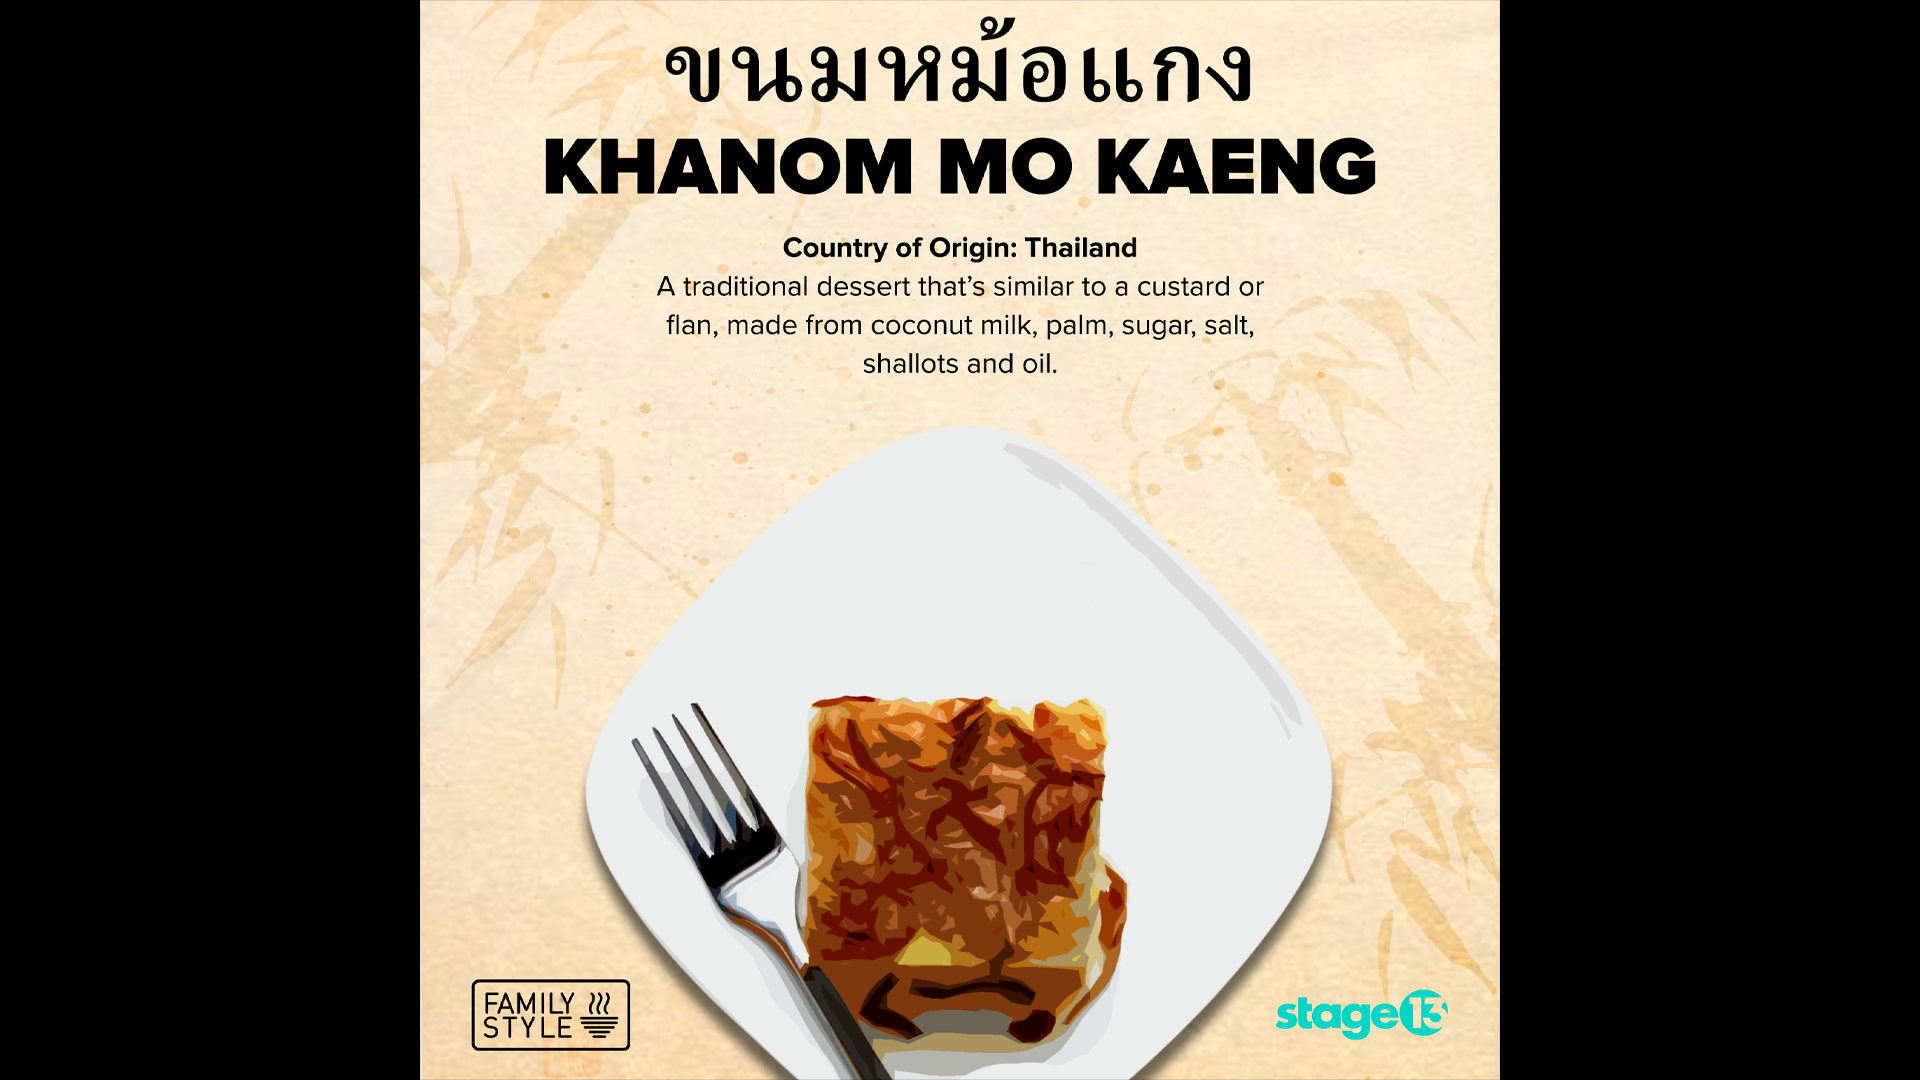 Khanom Mo Kaeng